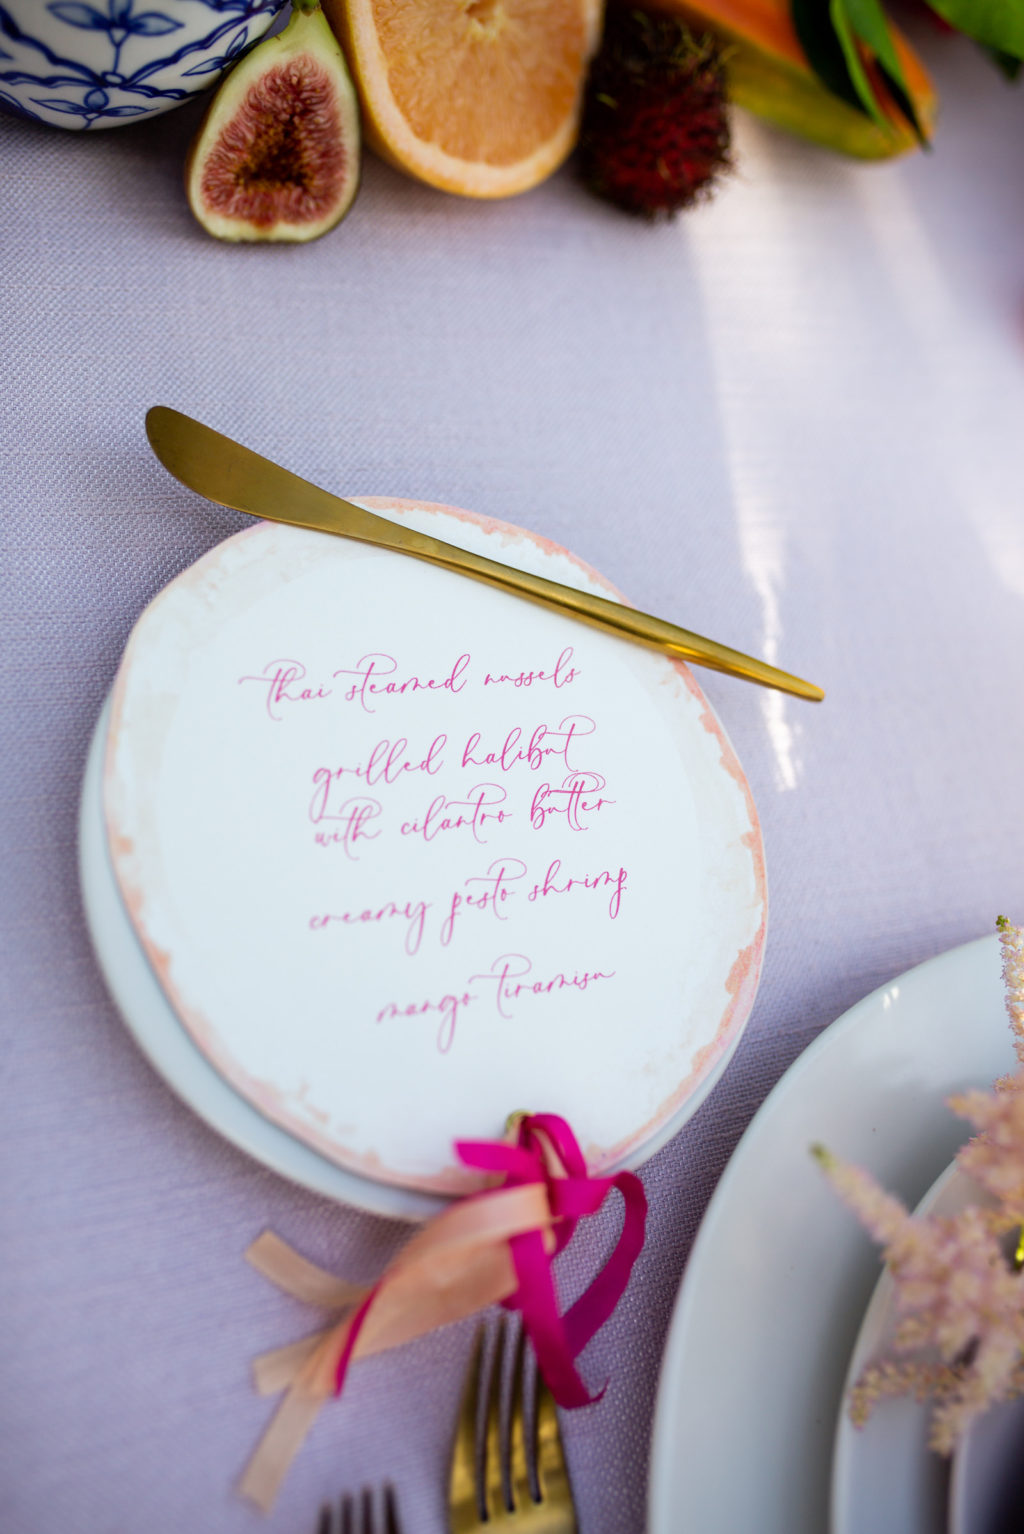 Citrus Inspired Florida Wedding Reception Decor, Table Setting with Custom Circle Menu Bright Pink Calligraphy, Gold Flatware